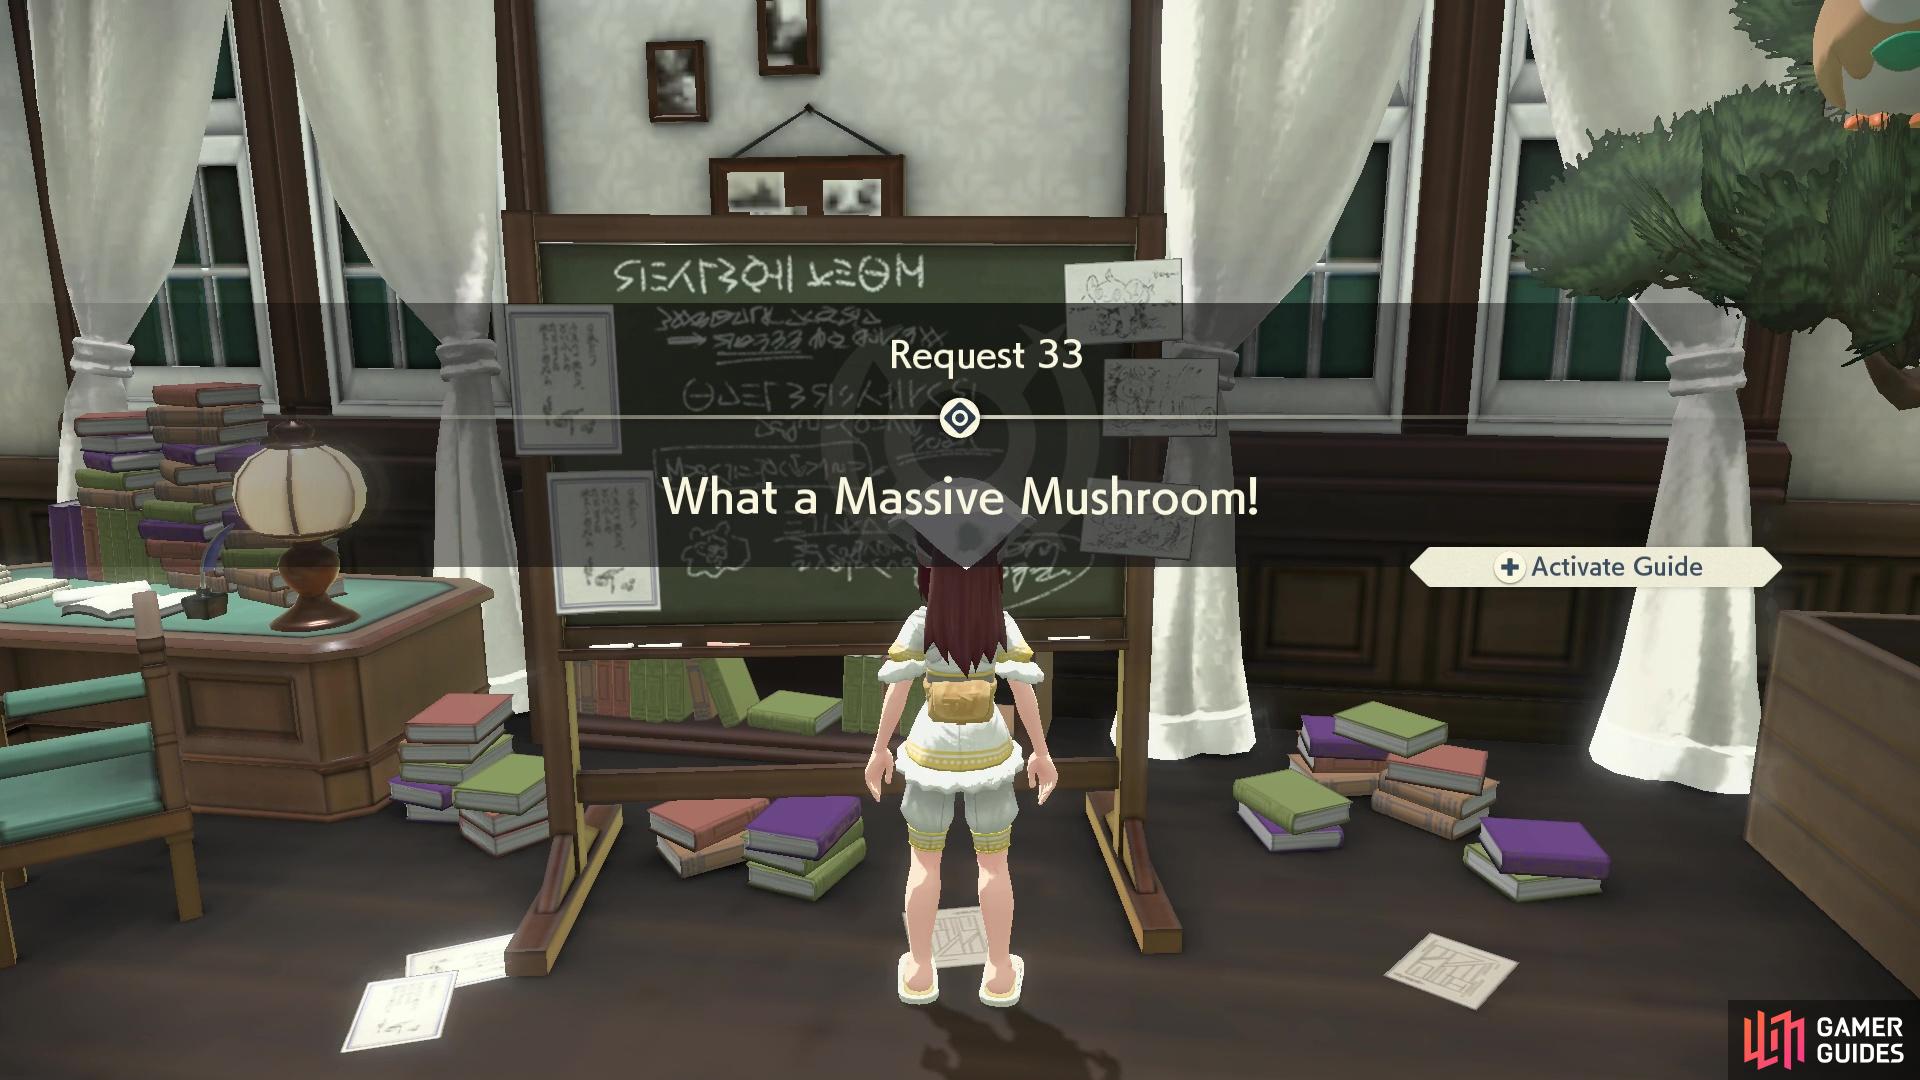 Request 33: What a Massive Mushroom!